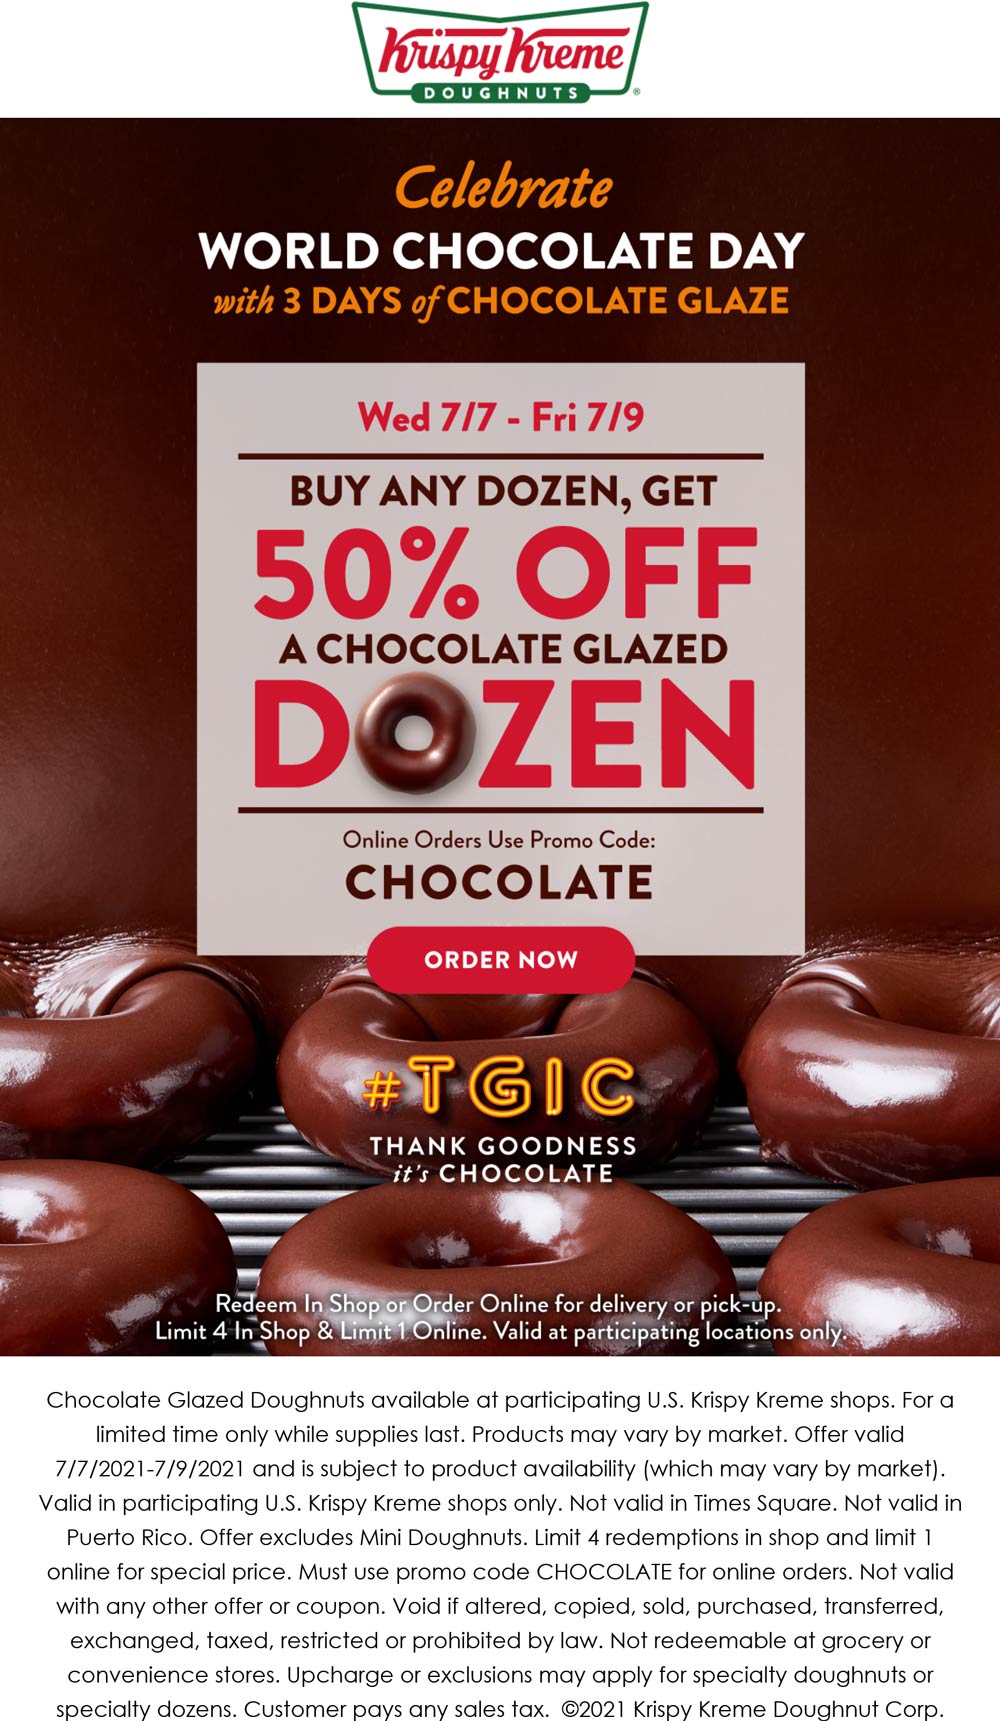 Krispy Kreme restaurants Coupon  50% off second dozen chocolate glazed today at Krispy Kreme doughnuts #krispykreme 